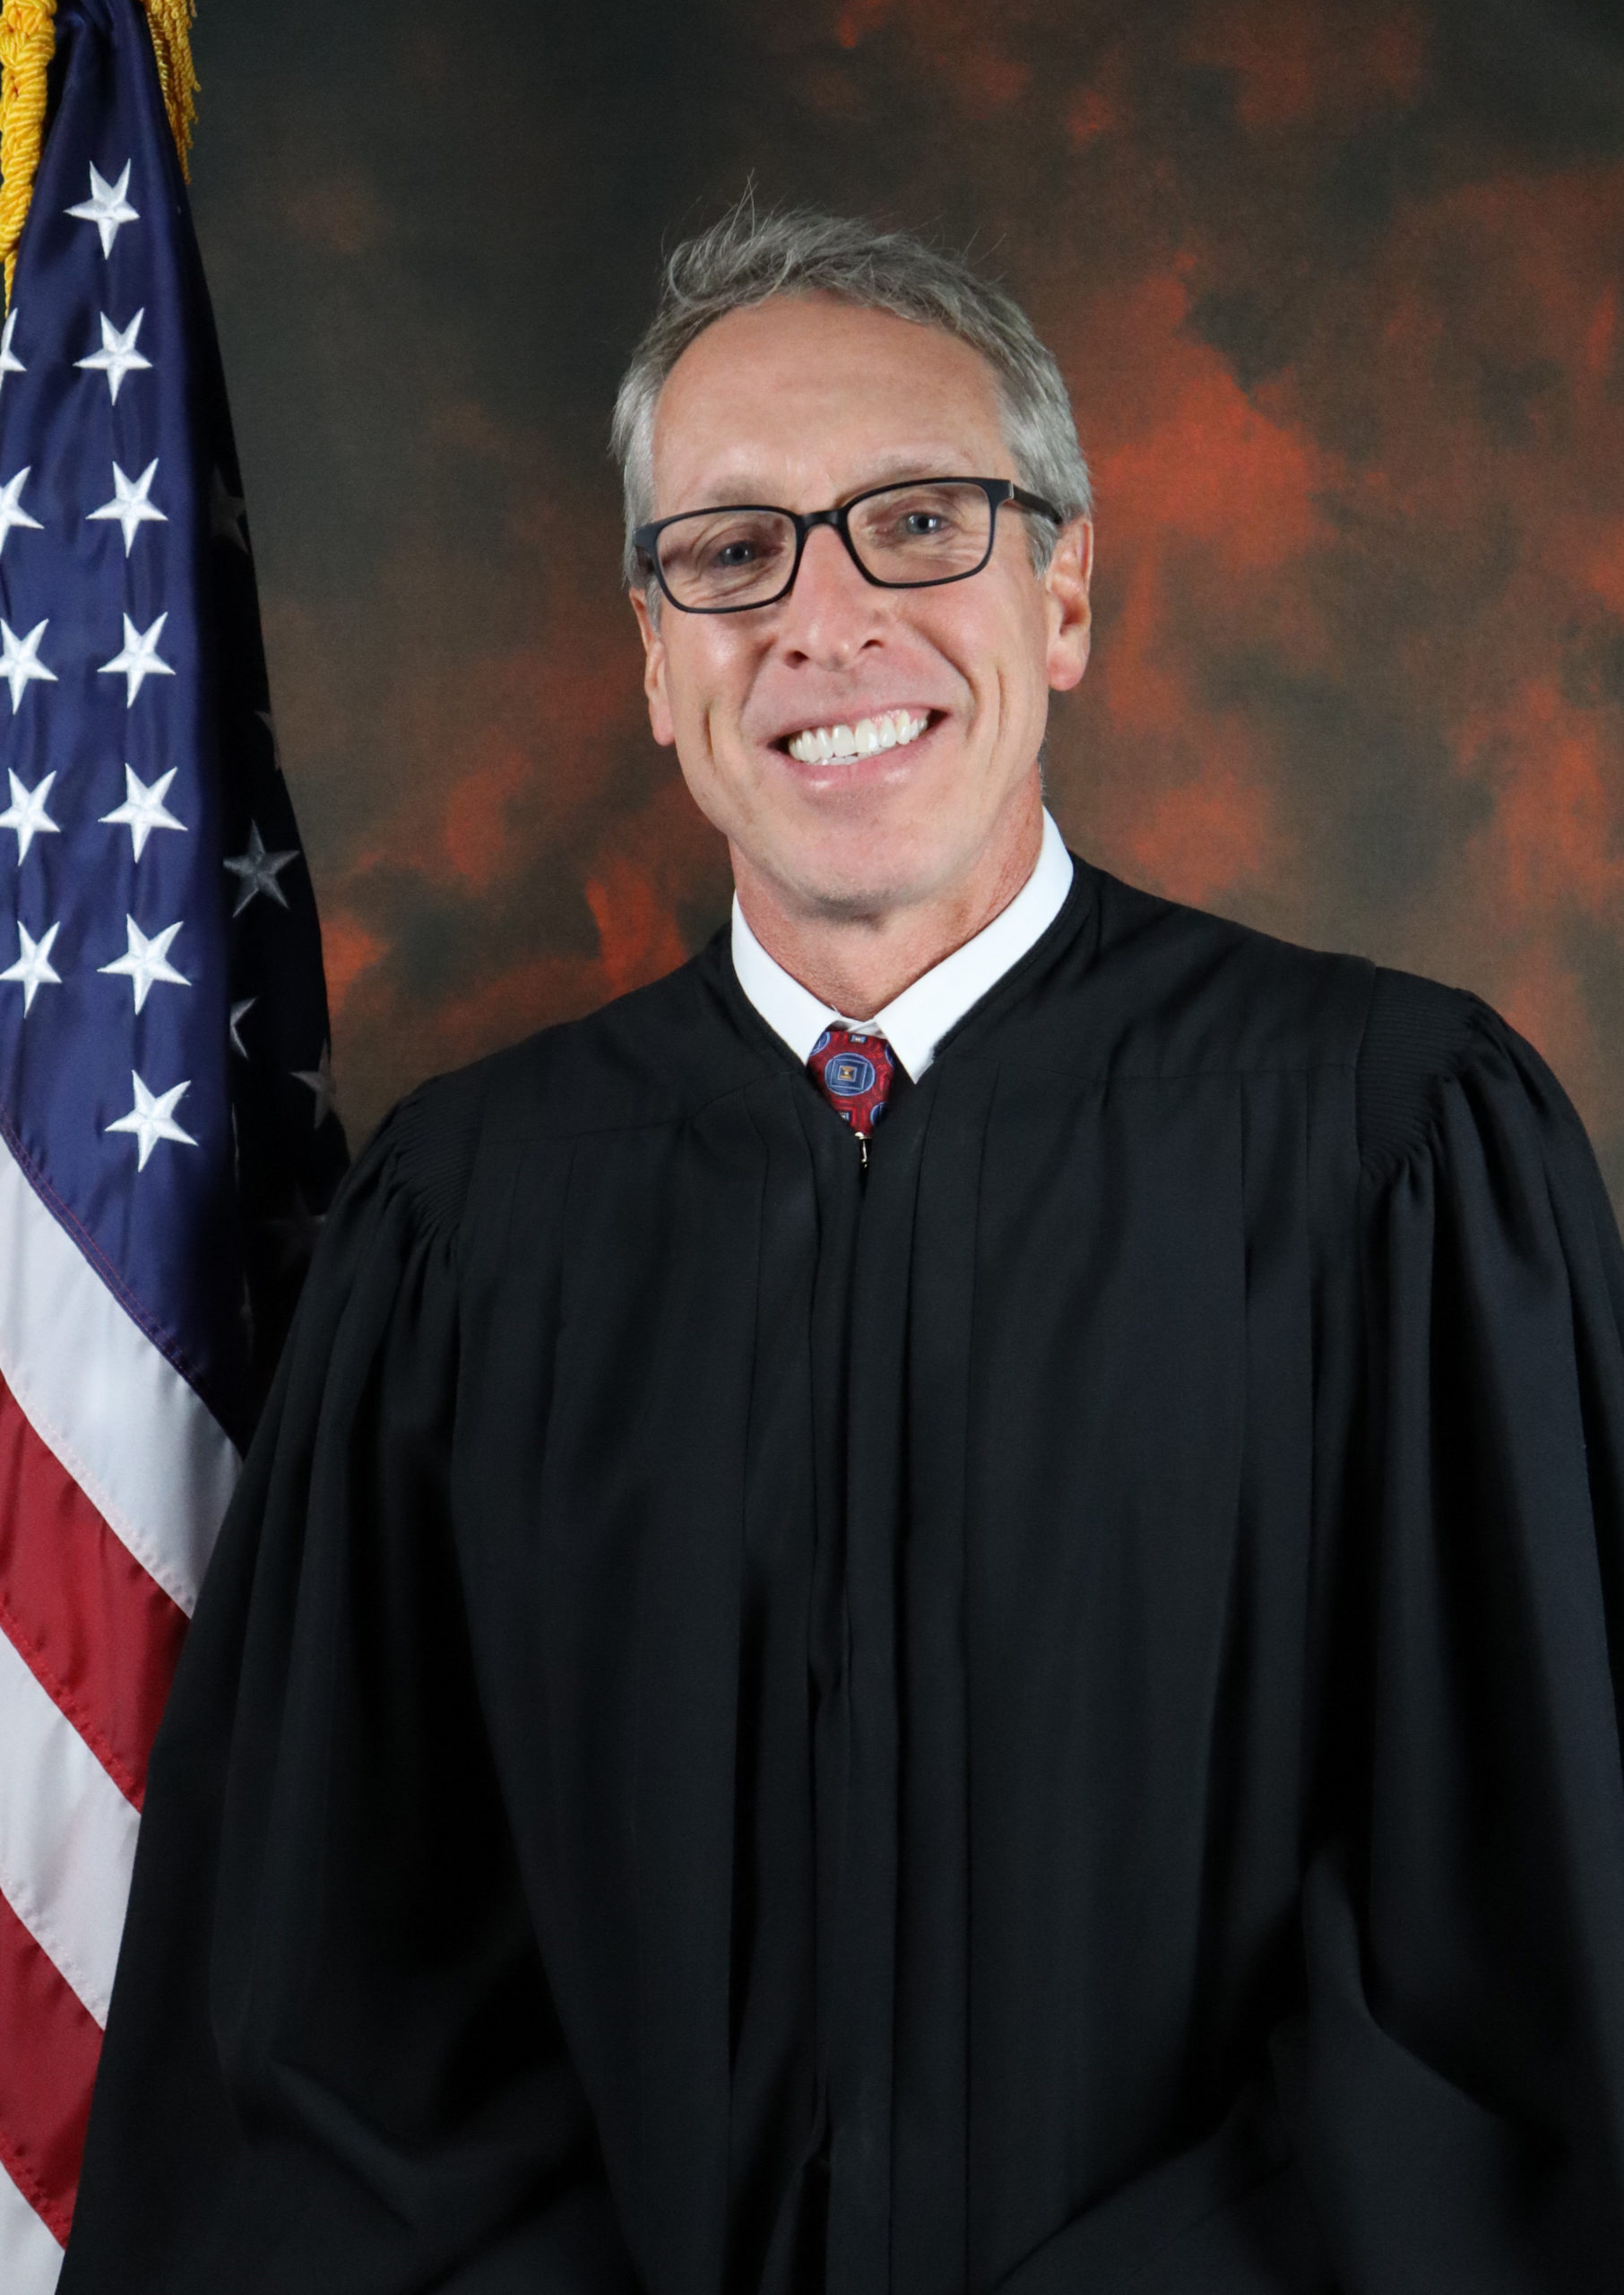 Judge Rogers